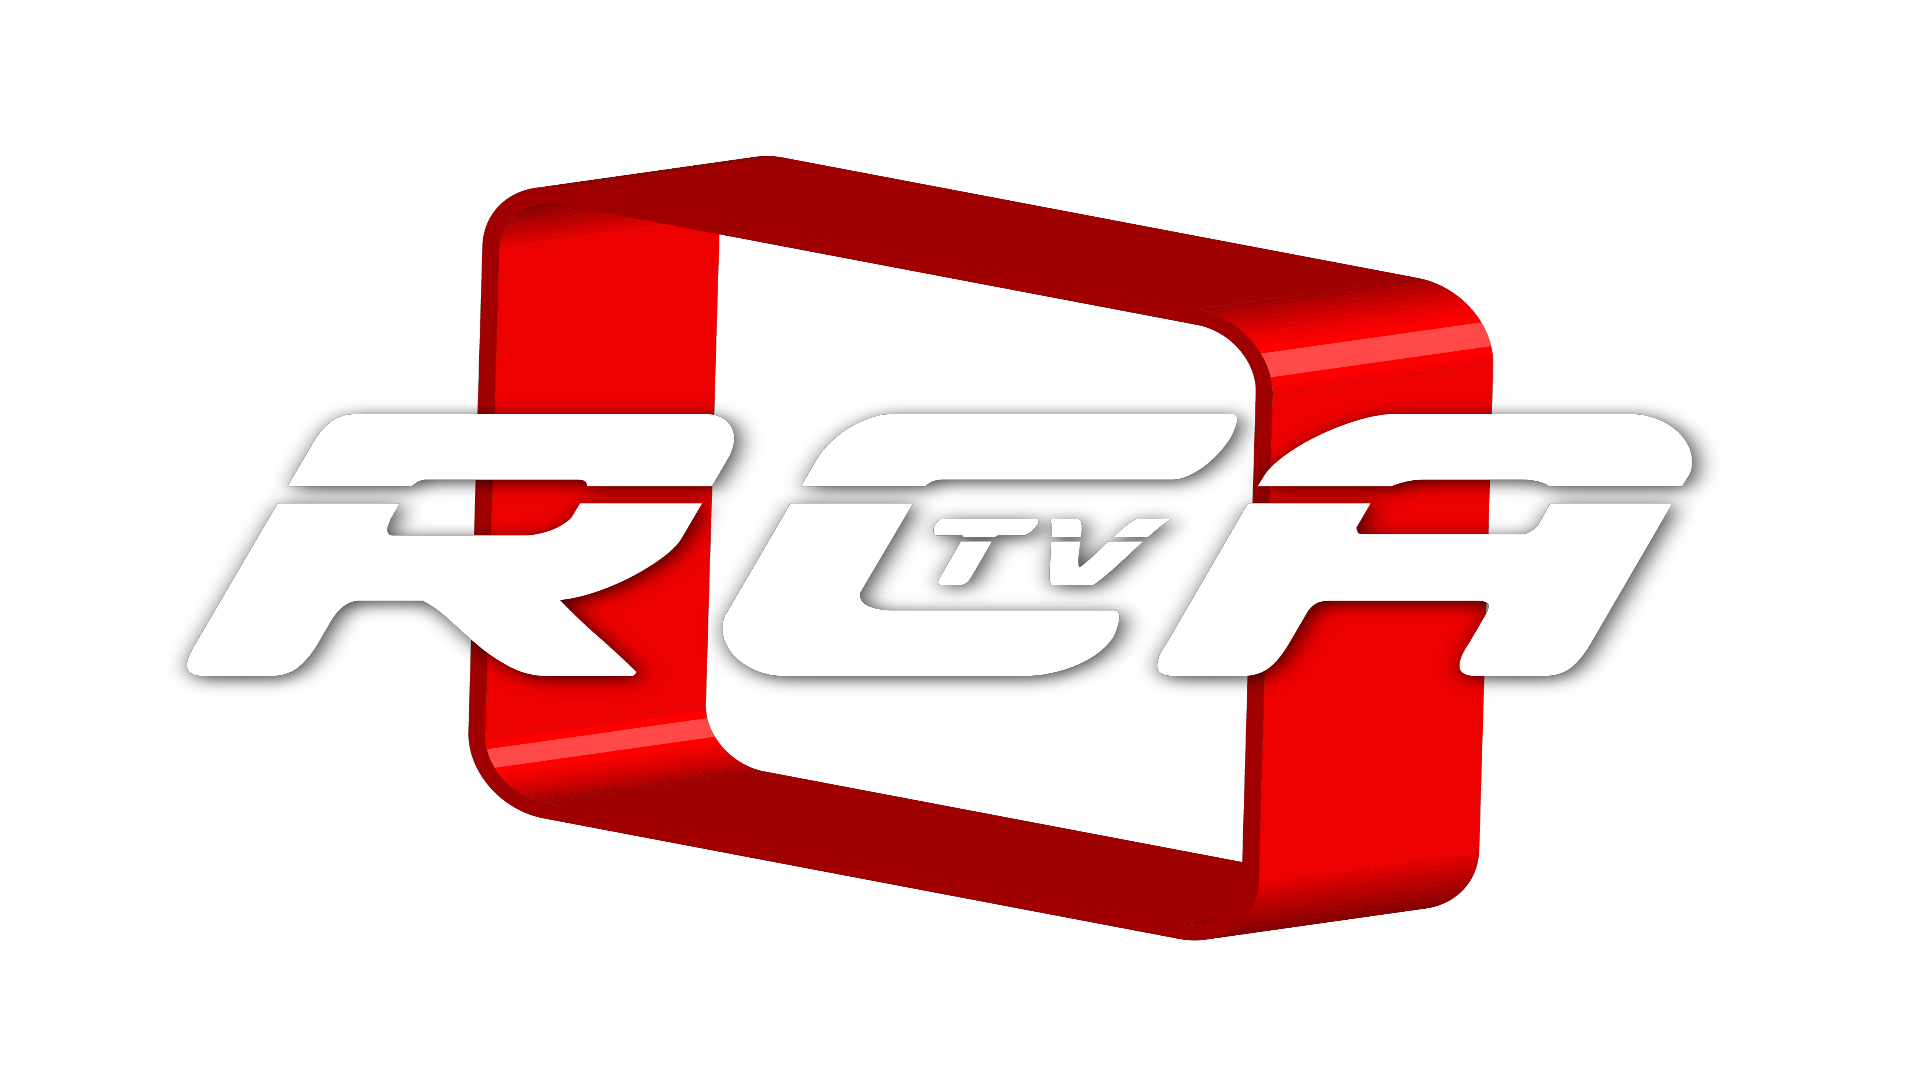 RCA TV